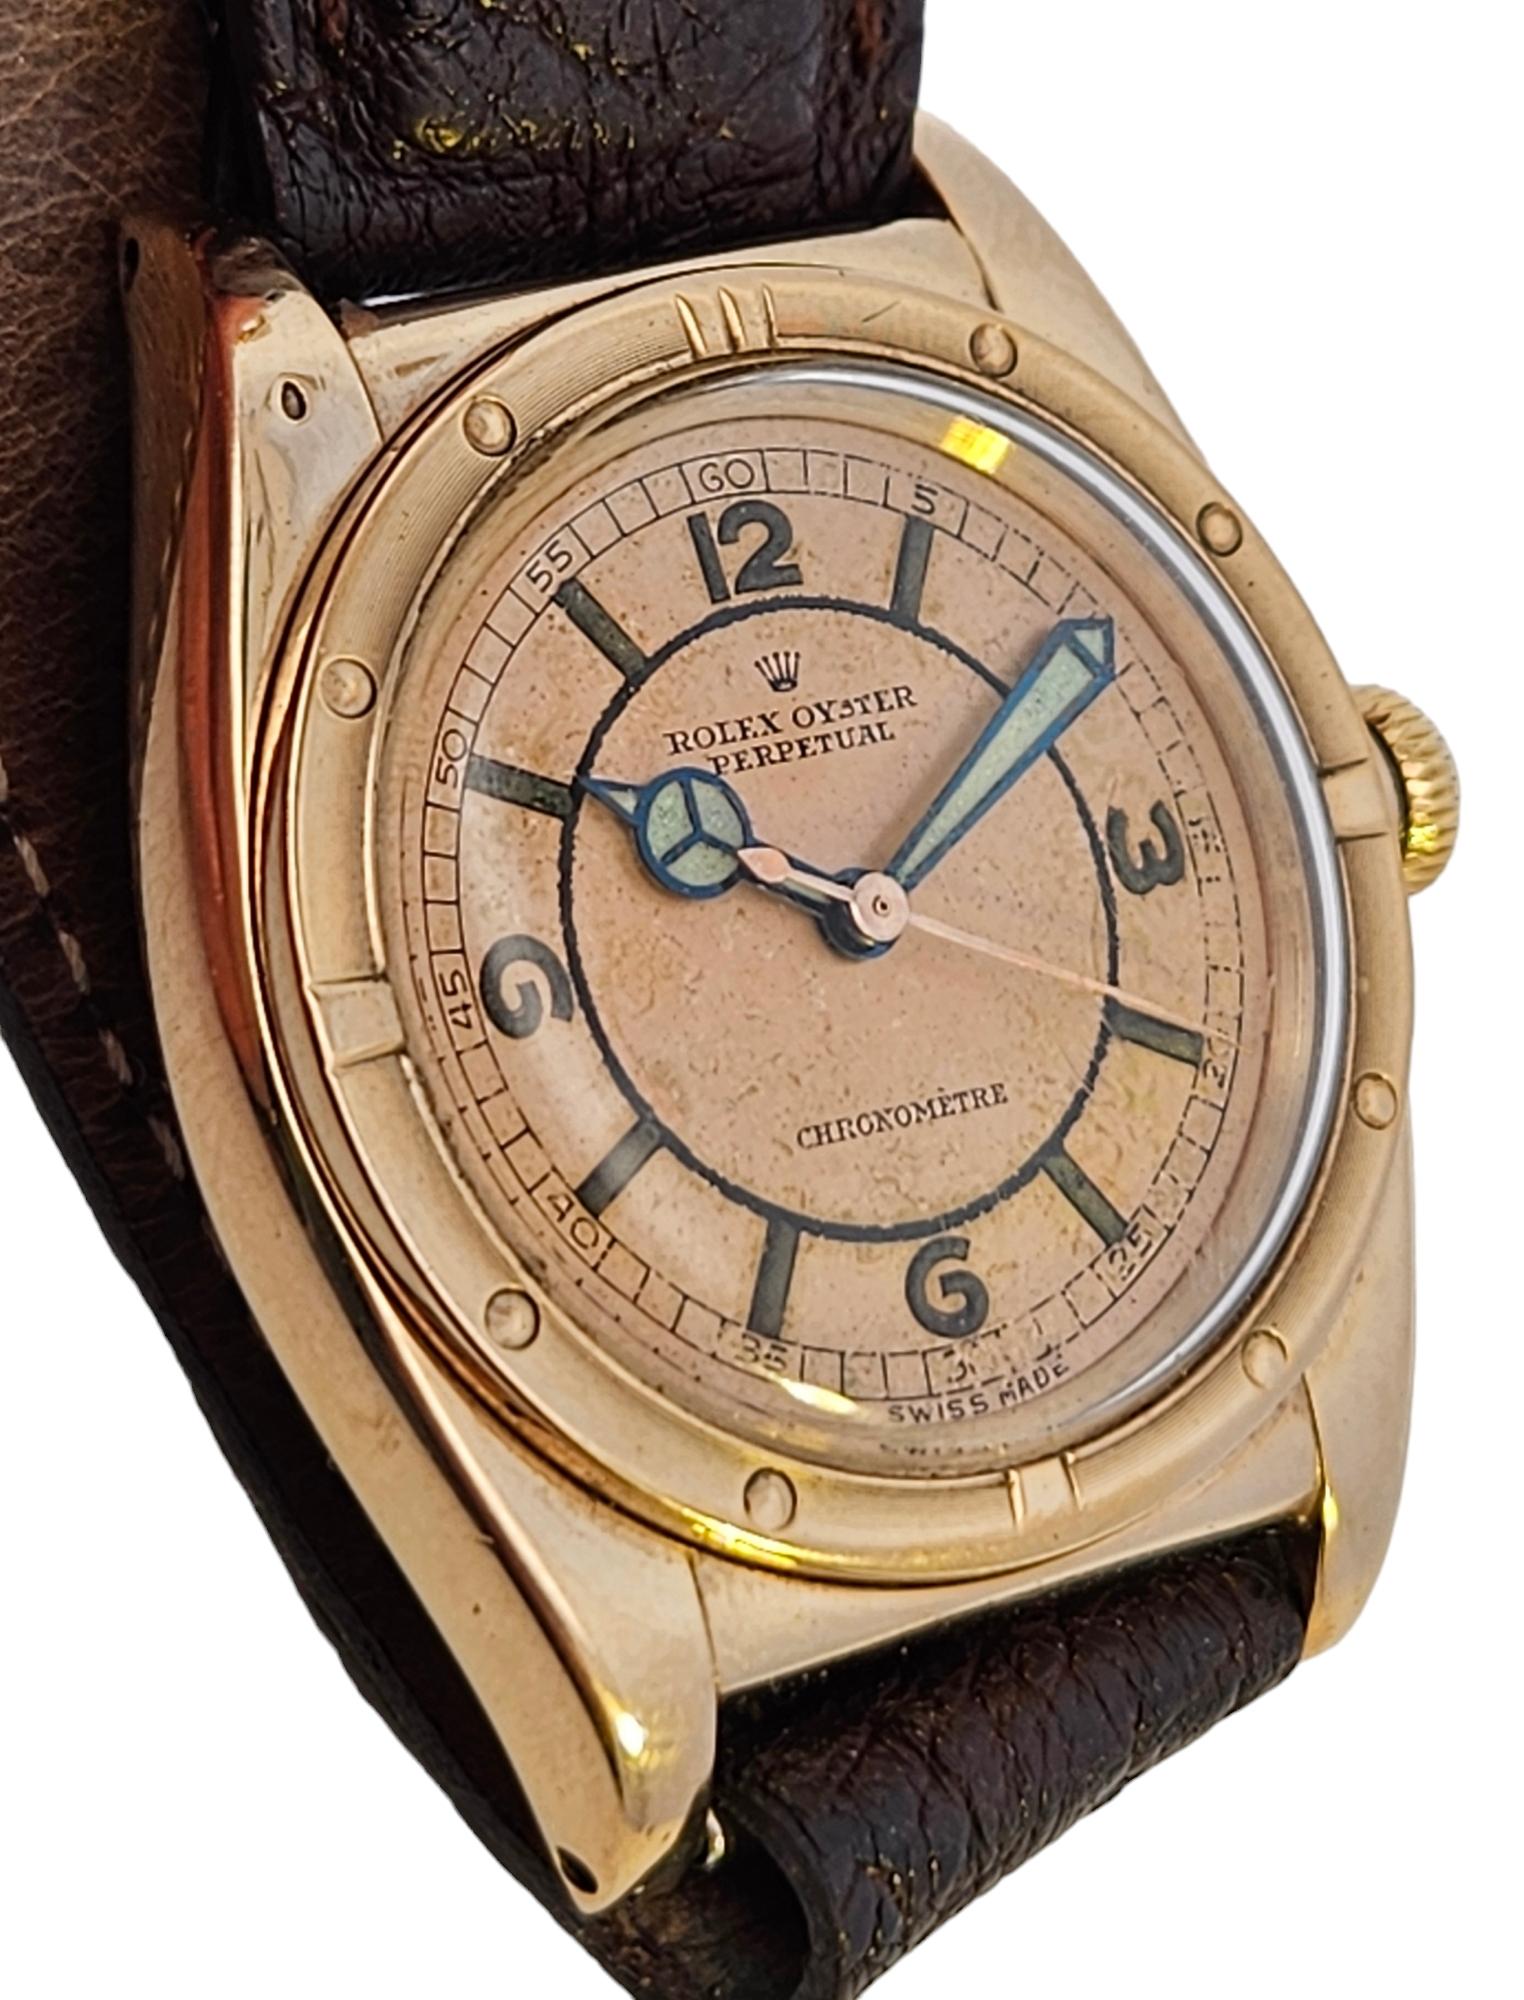 Artisan Pink Gold & Stainless Steel Rolex Chronometre Bubble Back Automatic Wrist Watch